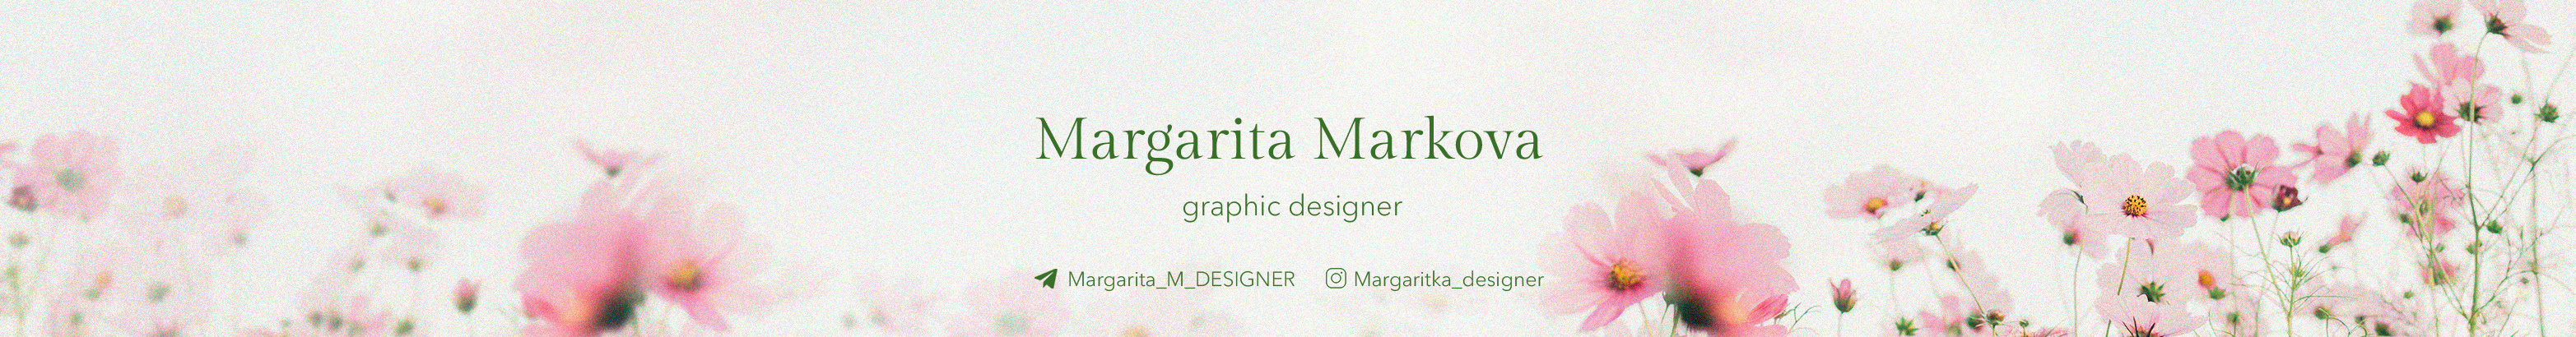 Margarita Markova's profile banner